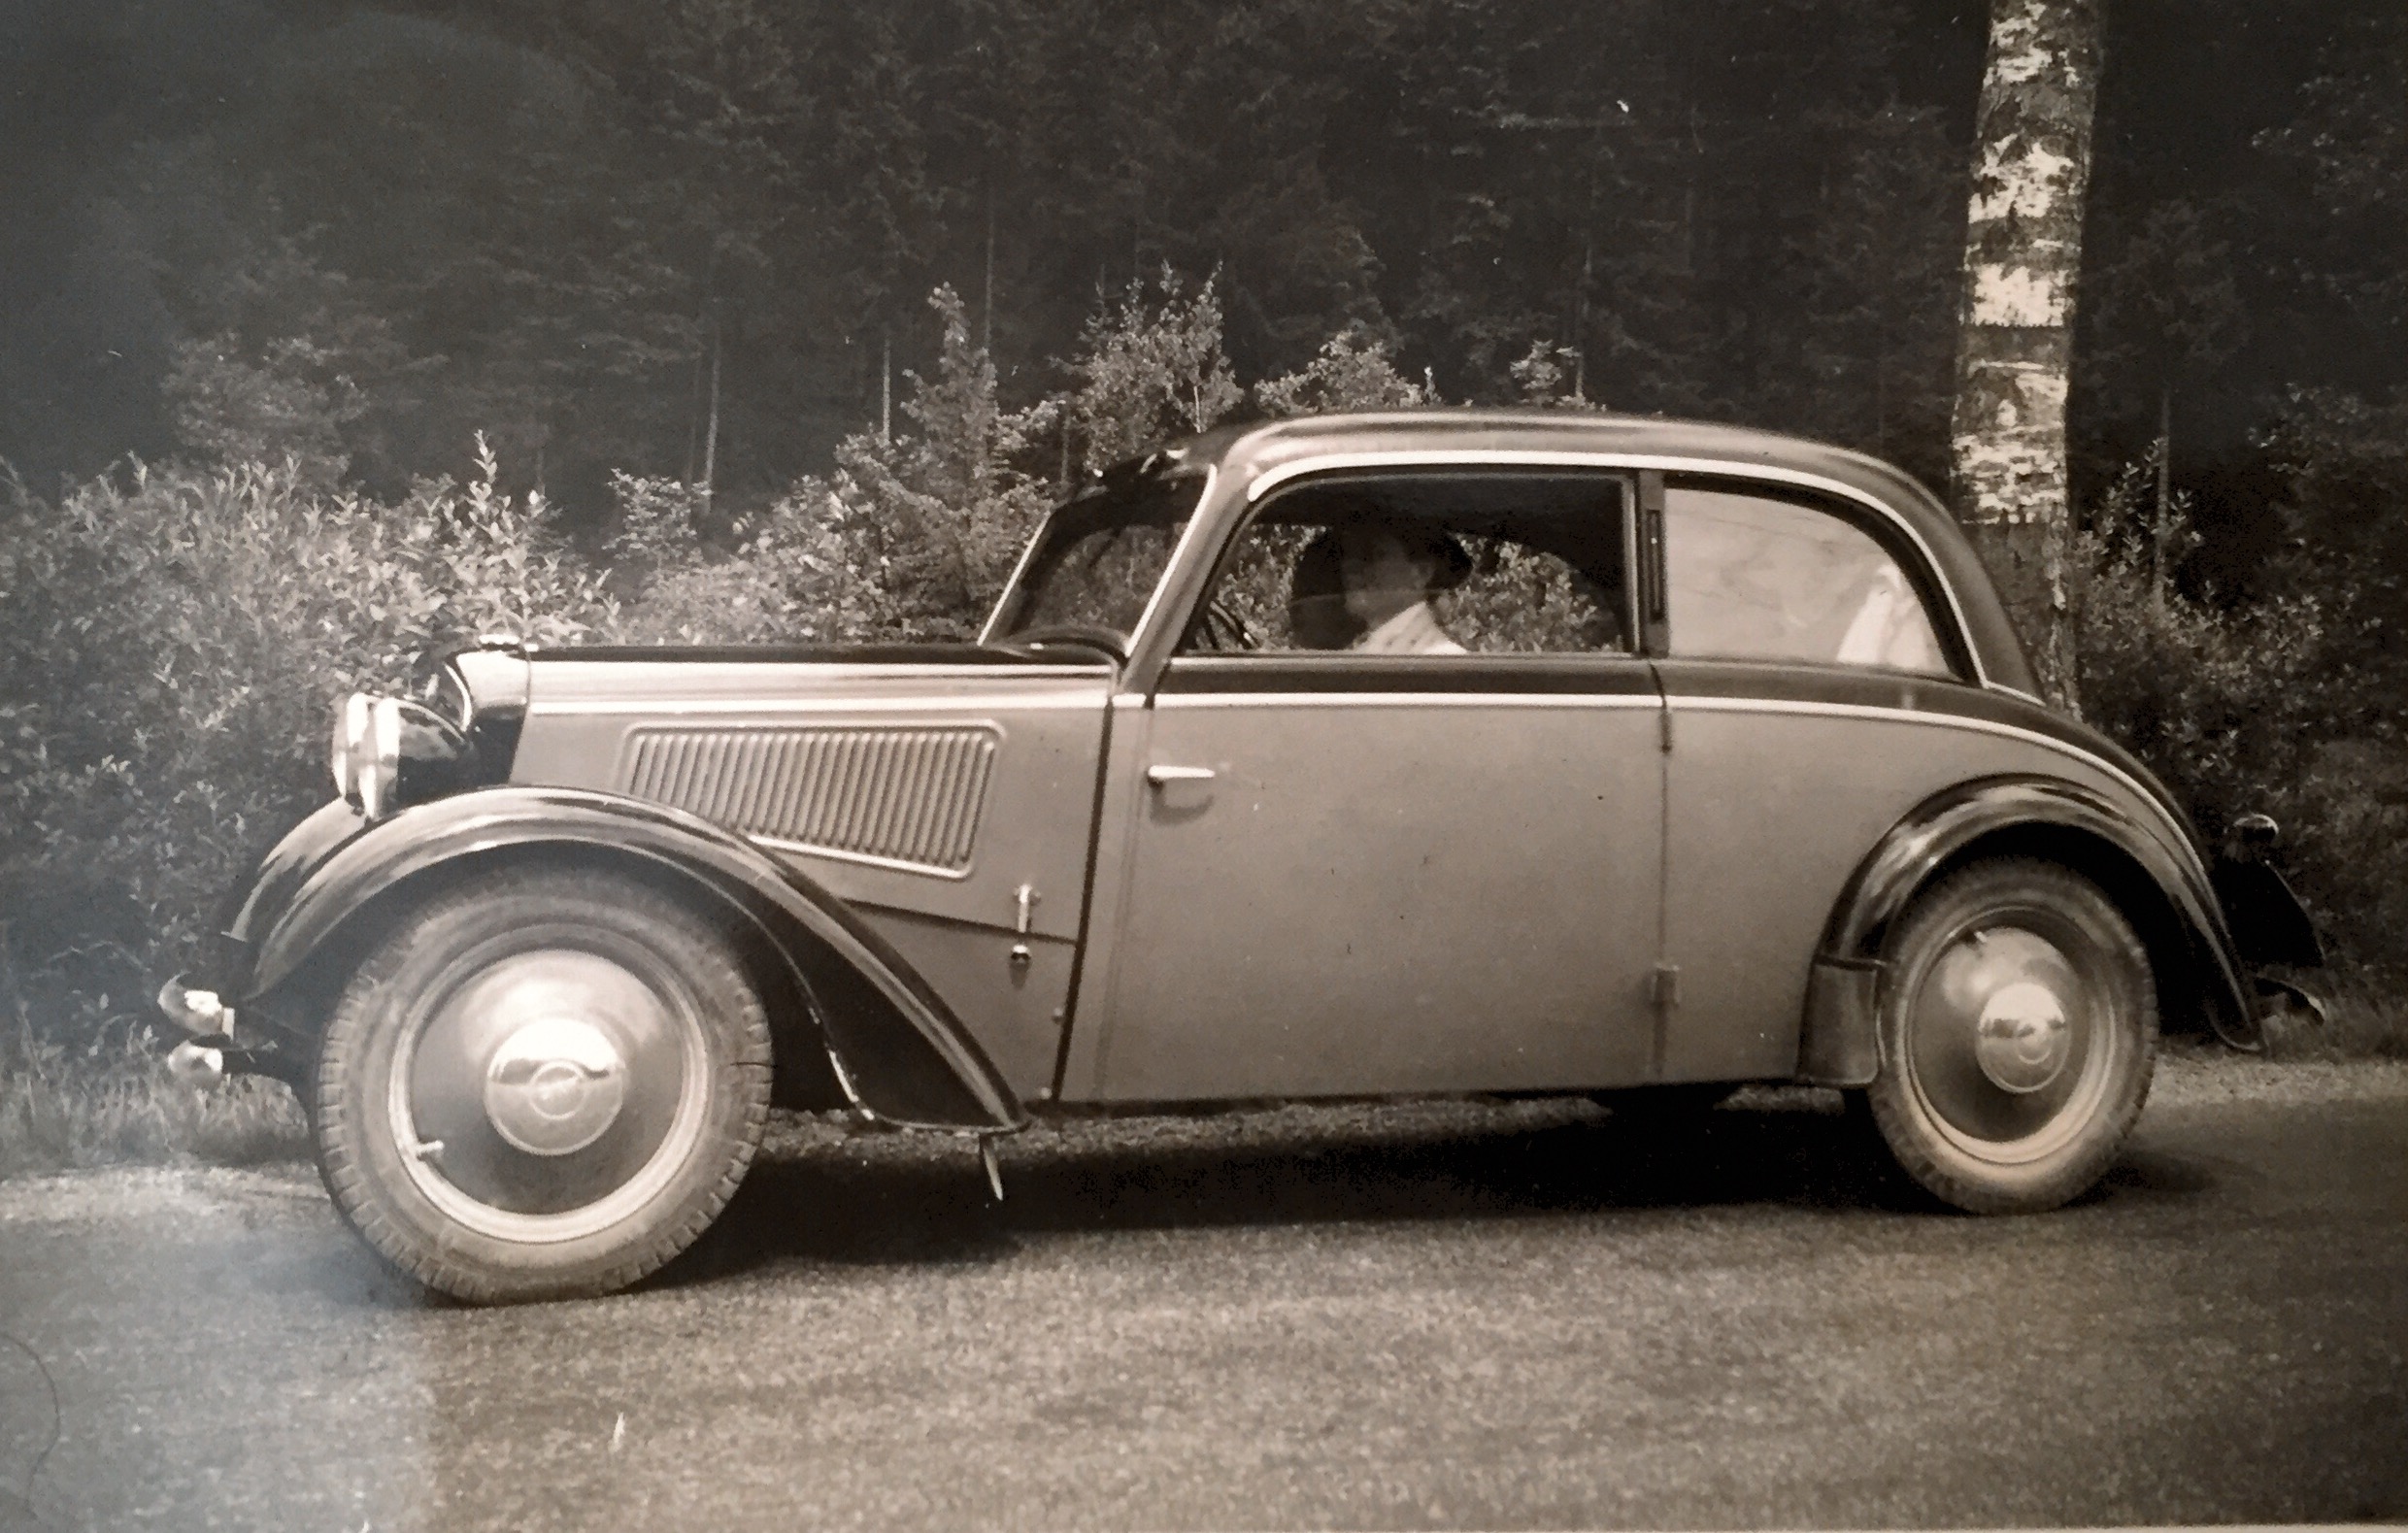 My grandparents new car 1938